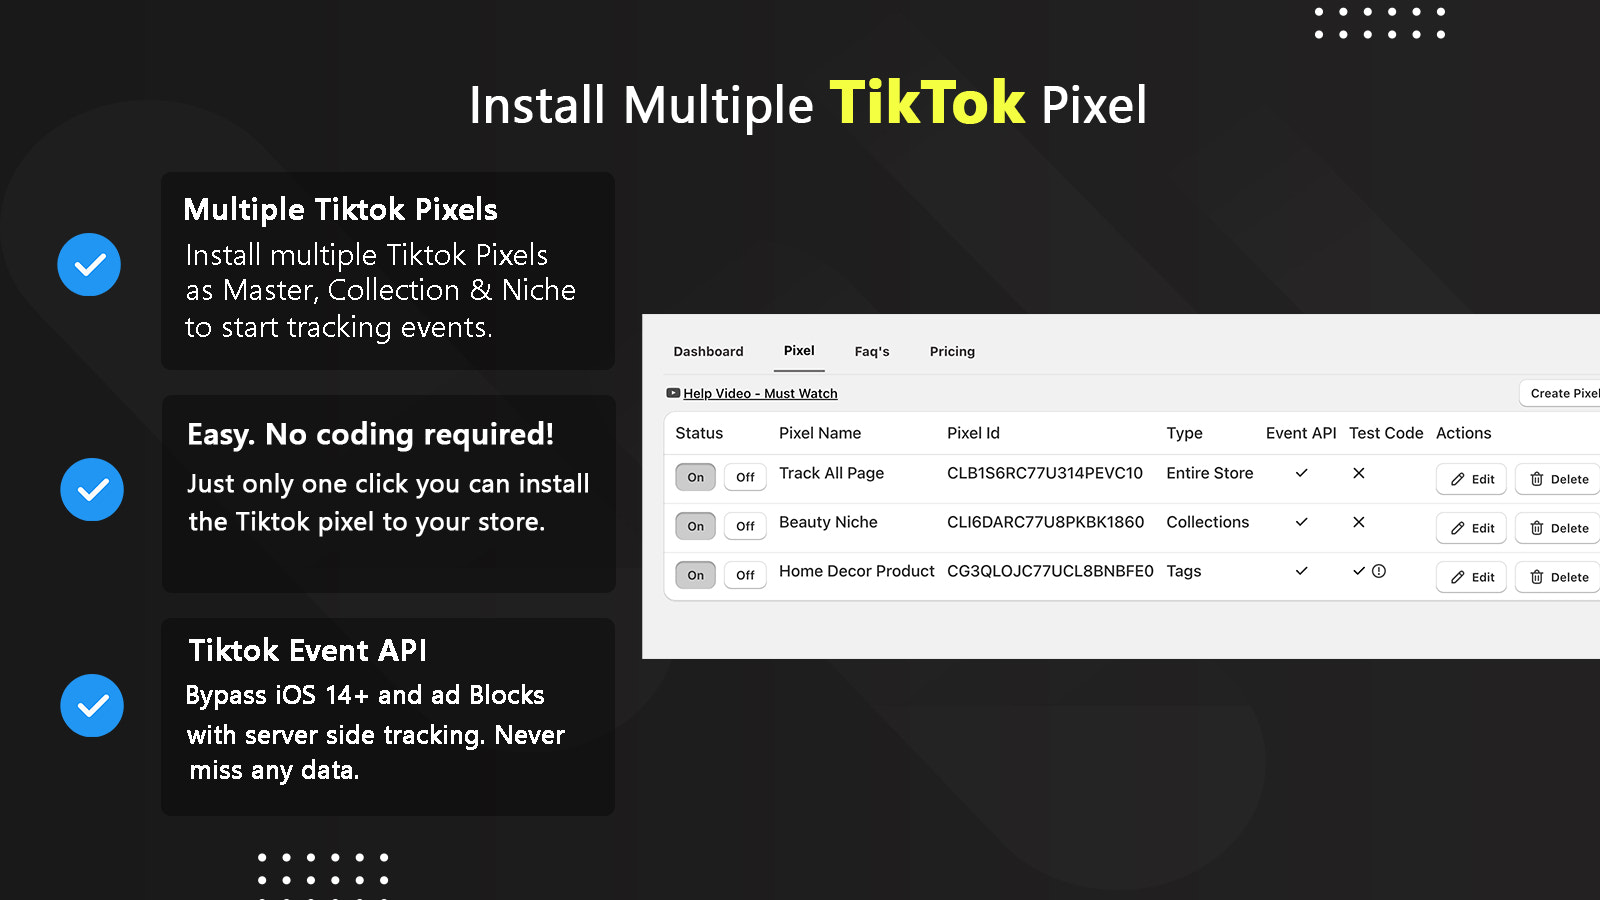 Multi-Tiktok-Pixel installieren